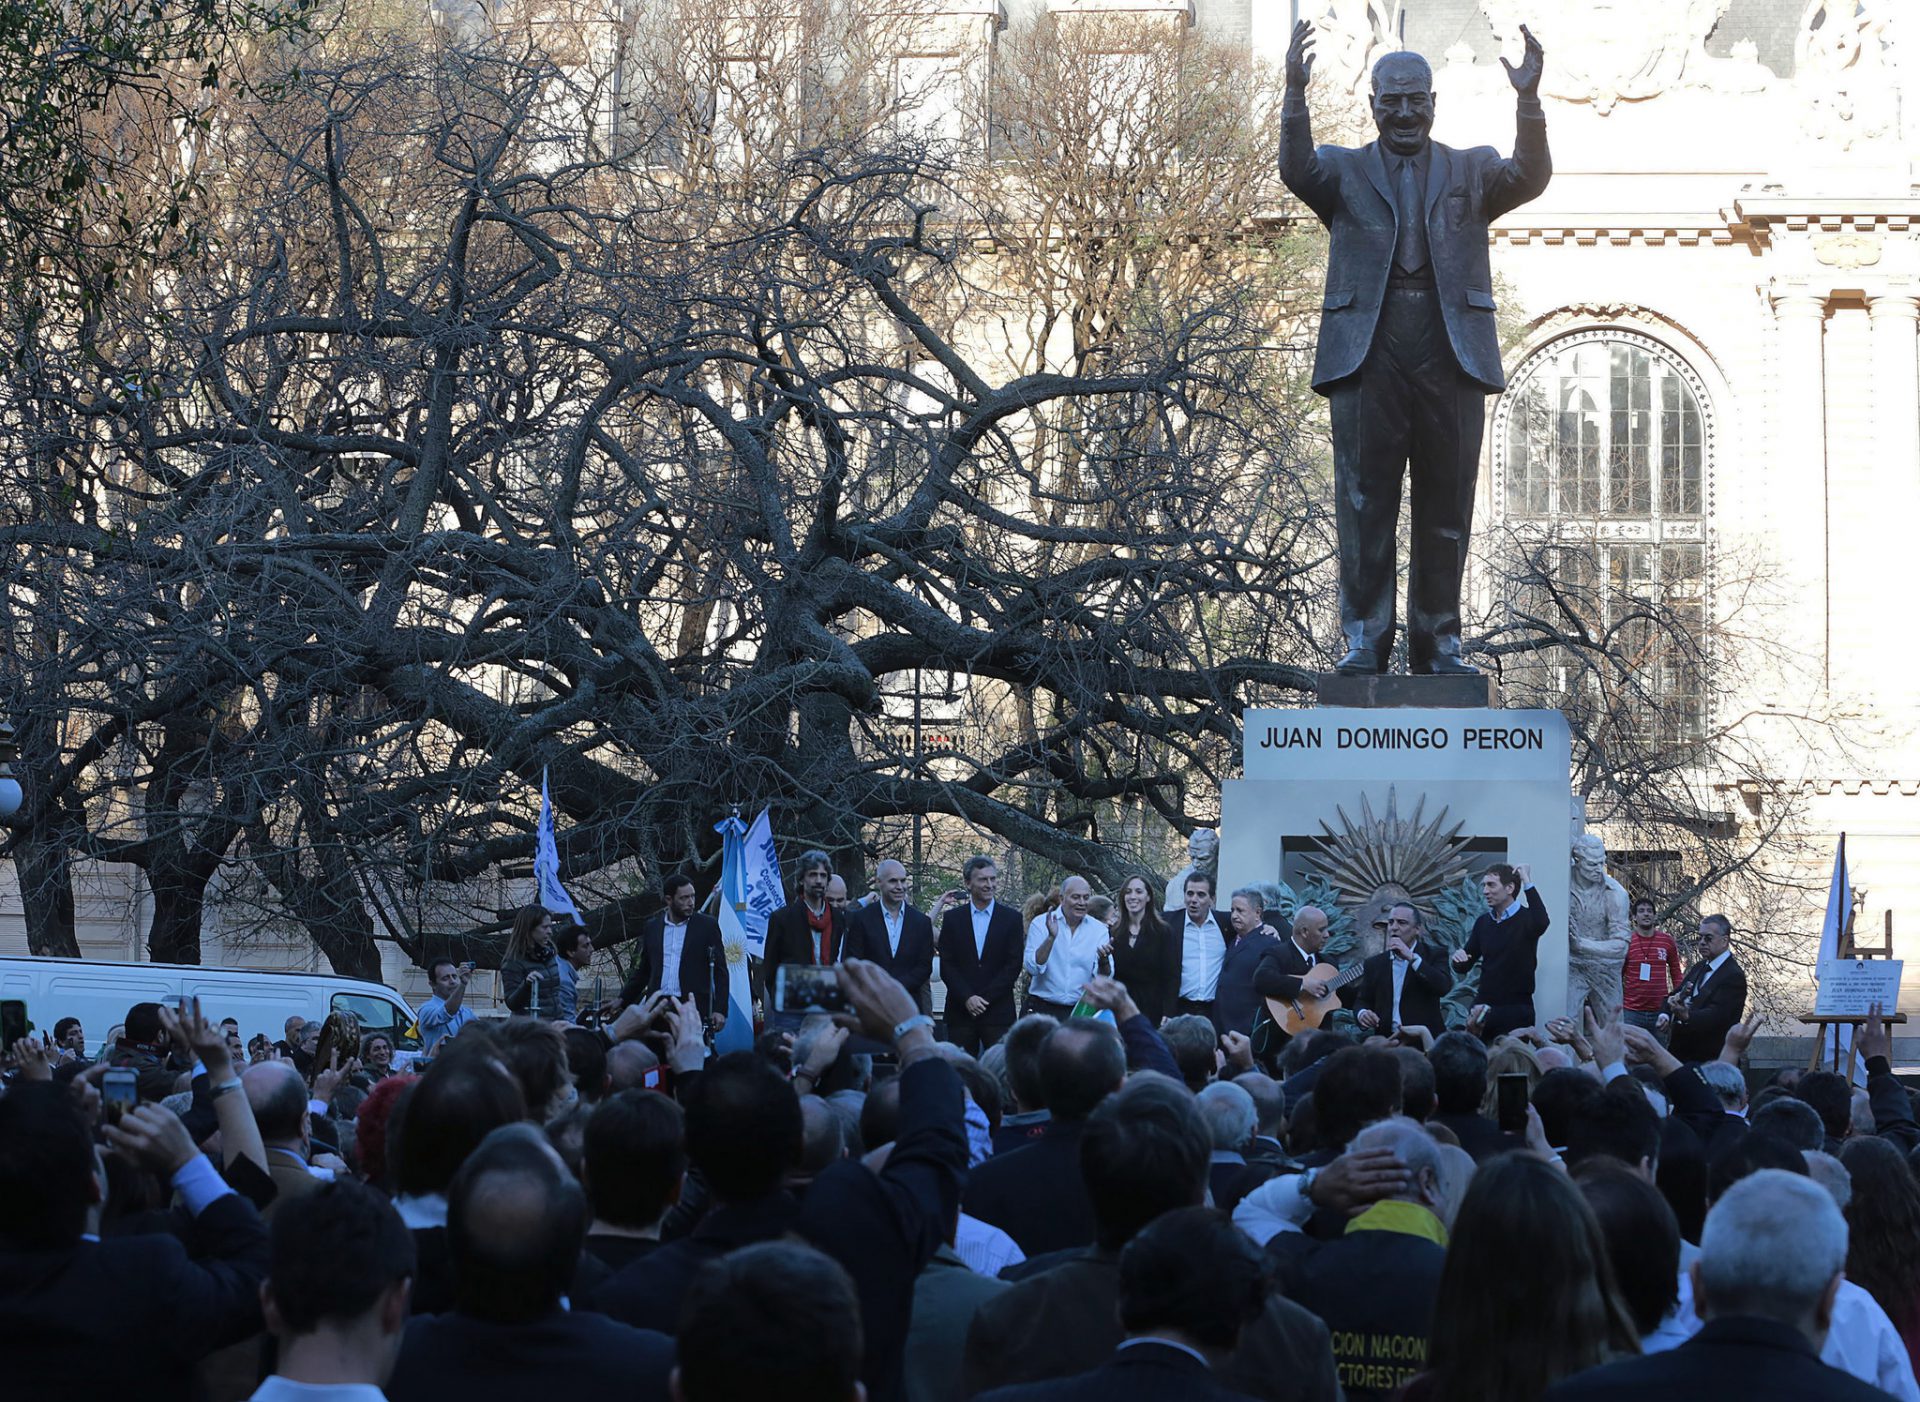 Macri participates in the inauguration of Peron's monument